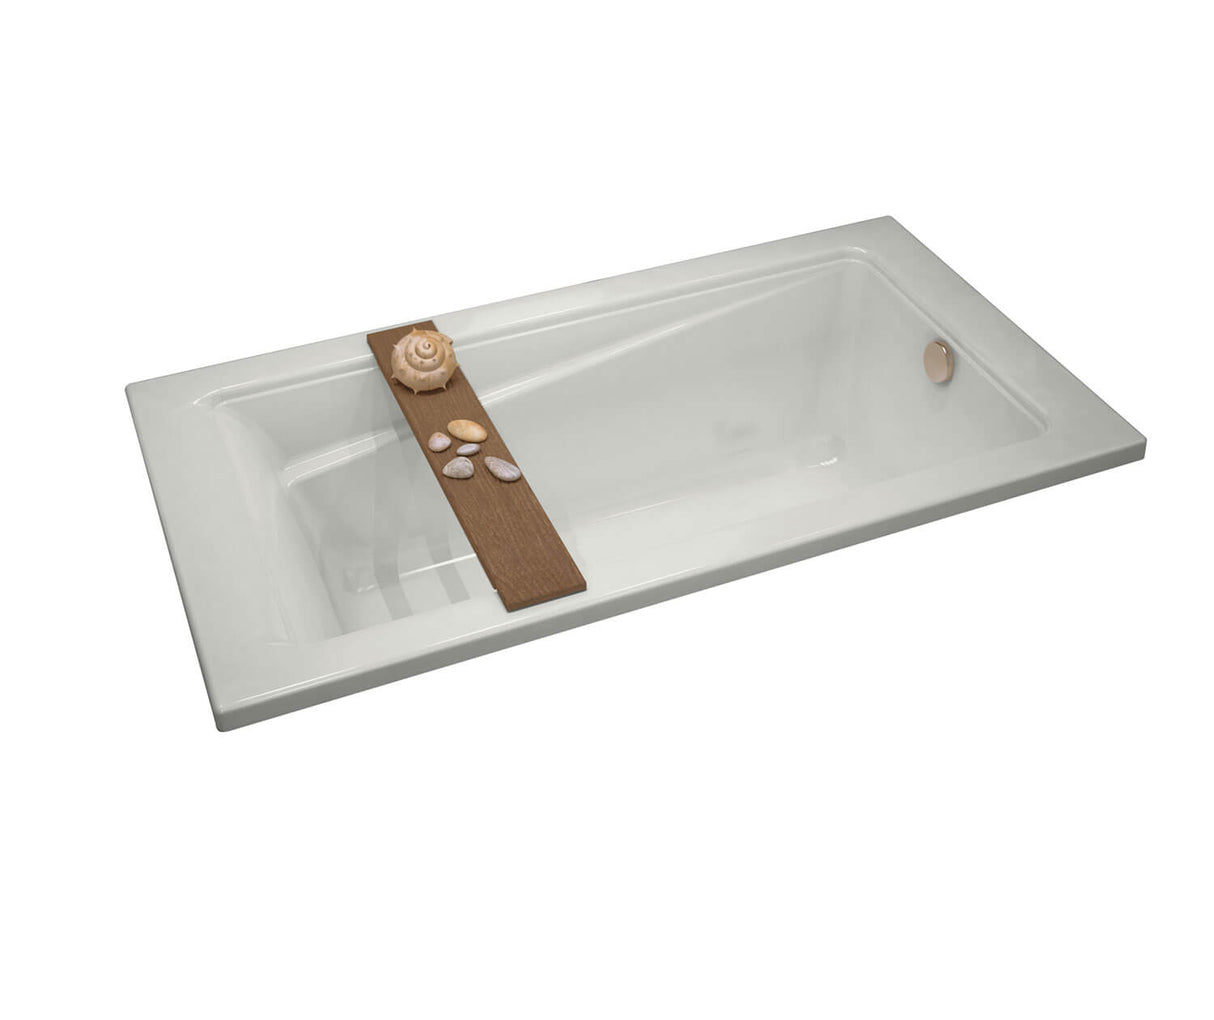 MAAX 106185-103-001-000 Exhibit 7242 Acrylic Drop-in End Drain Aeroeffect Bathtub in White